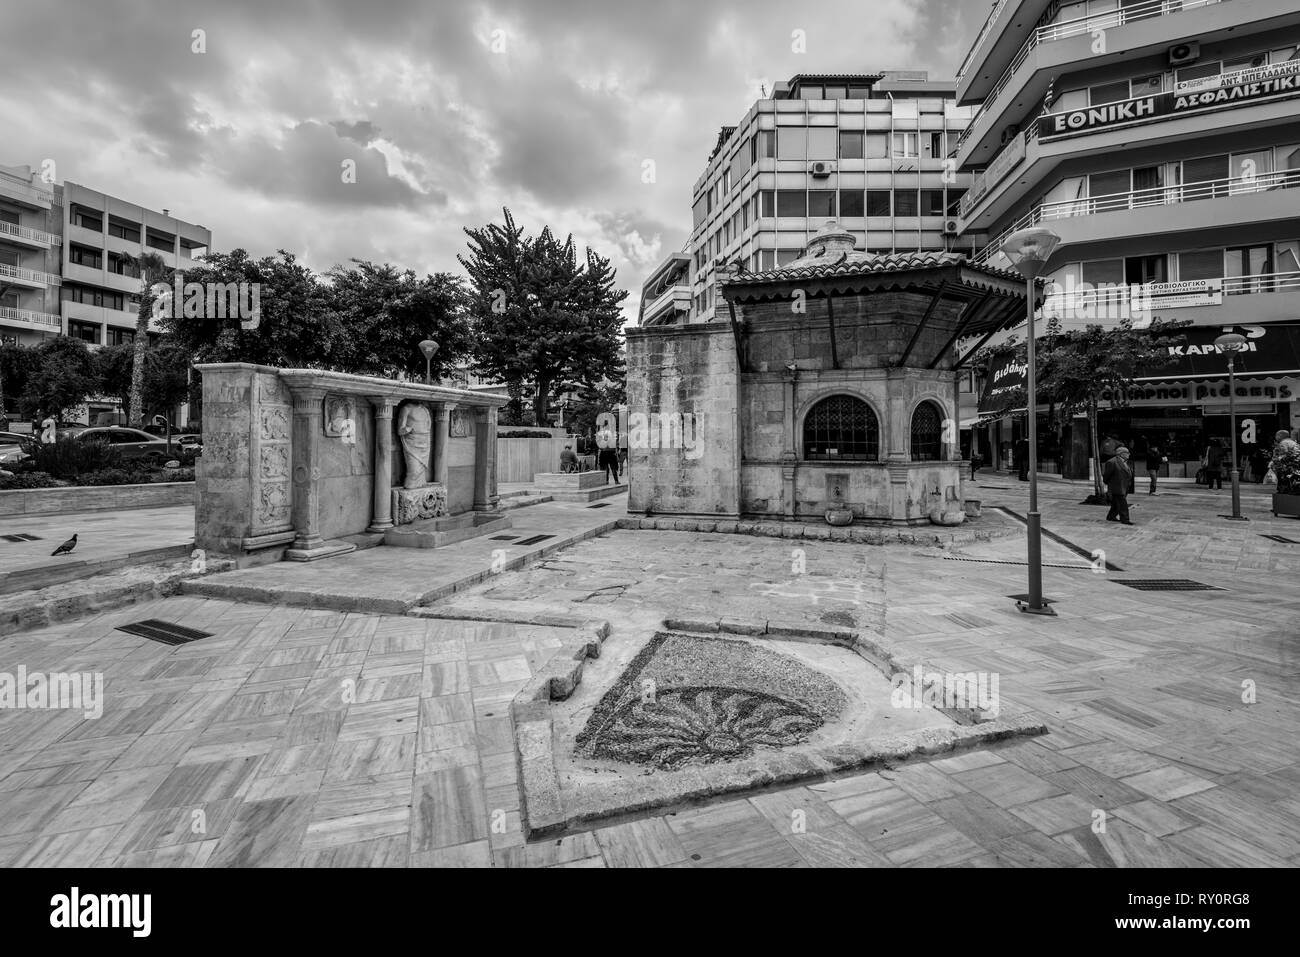 Heraklion, Kreta, Griechenland - 2 November, 2019: alten Venezianischen Bembo Brunnen in dem Kornarou Square, Heraklion, Kreta, Griechenland. Trinkwasser intak Stockfoto